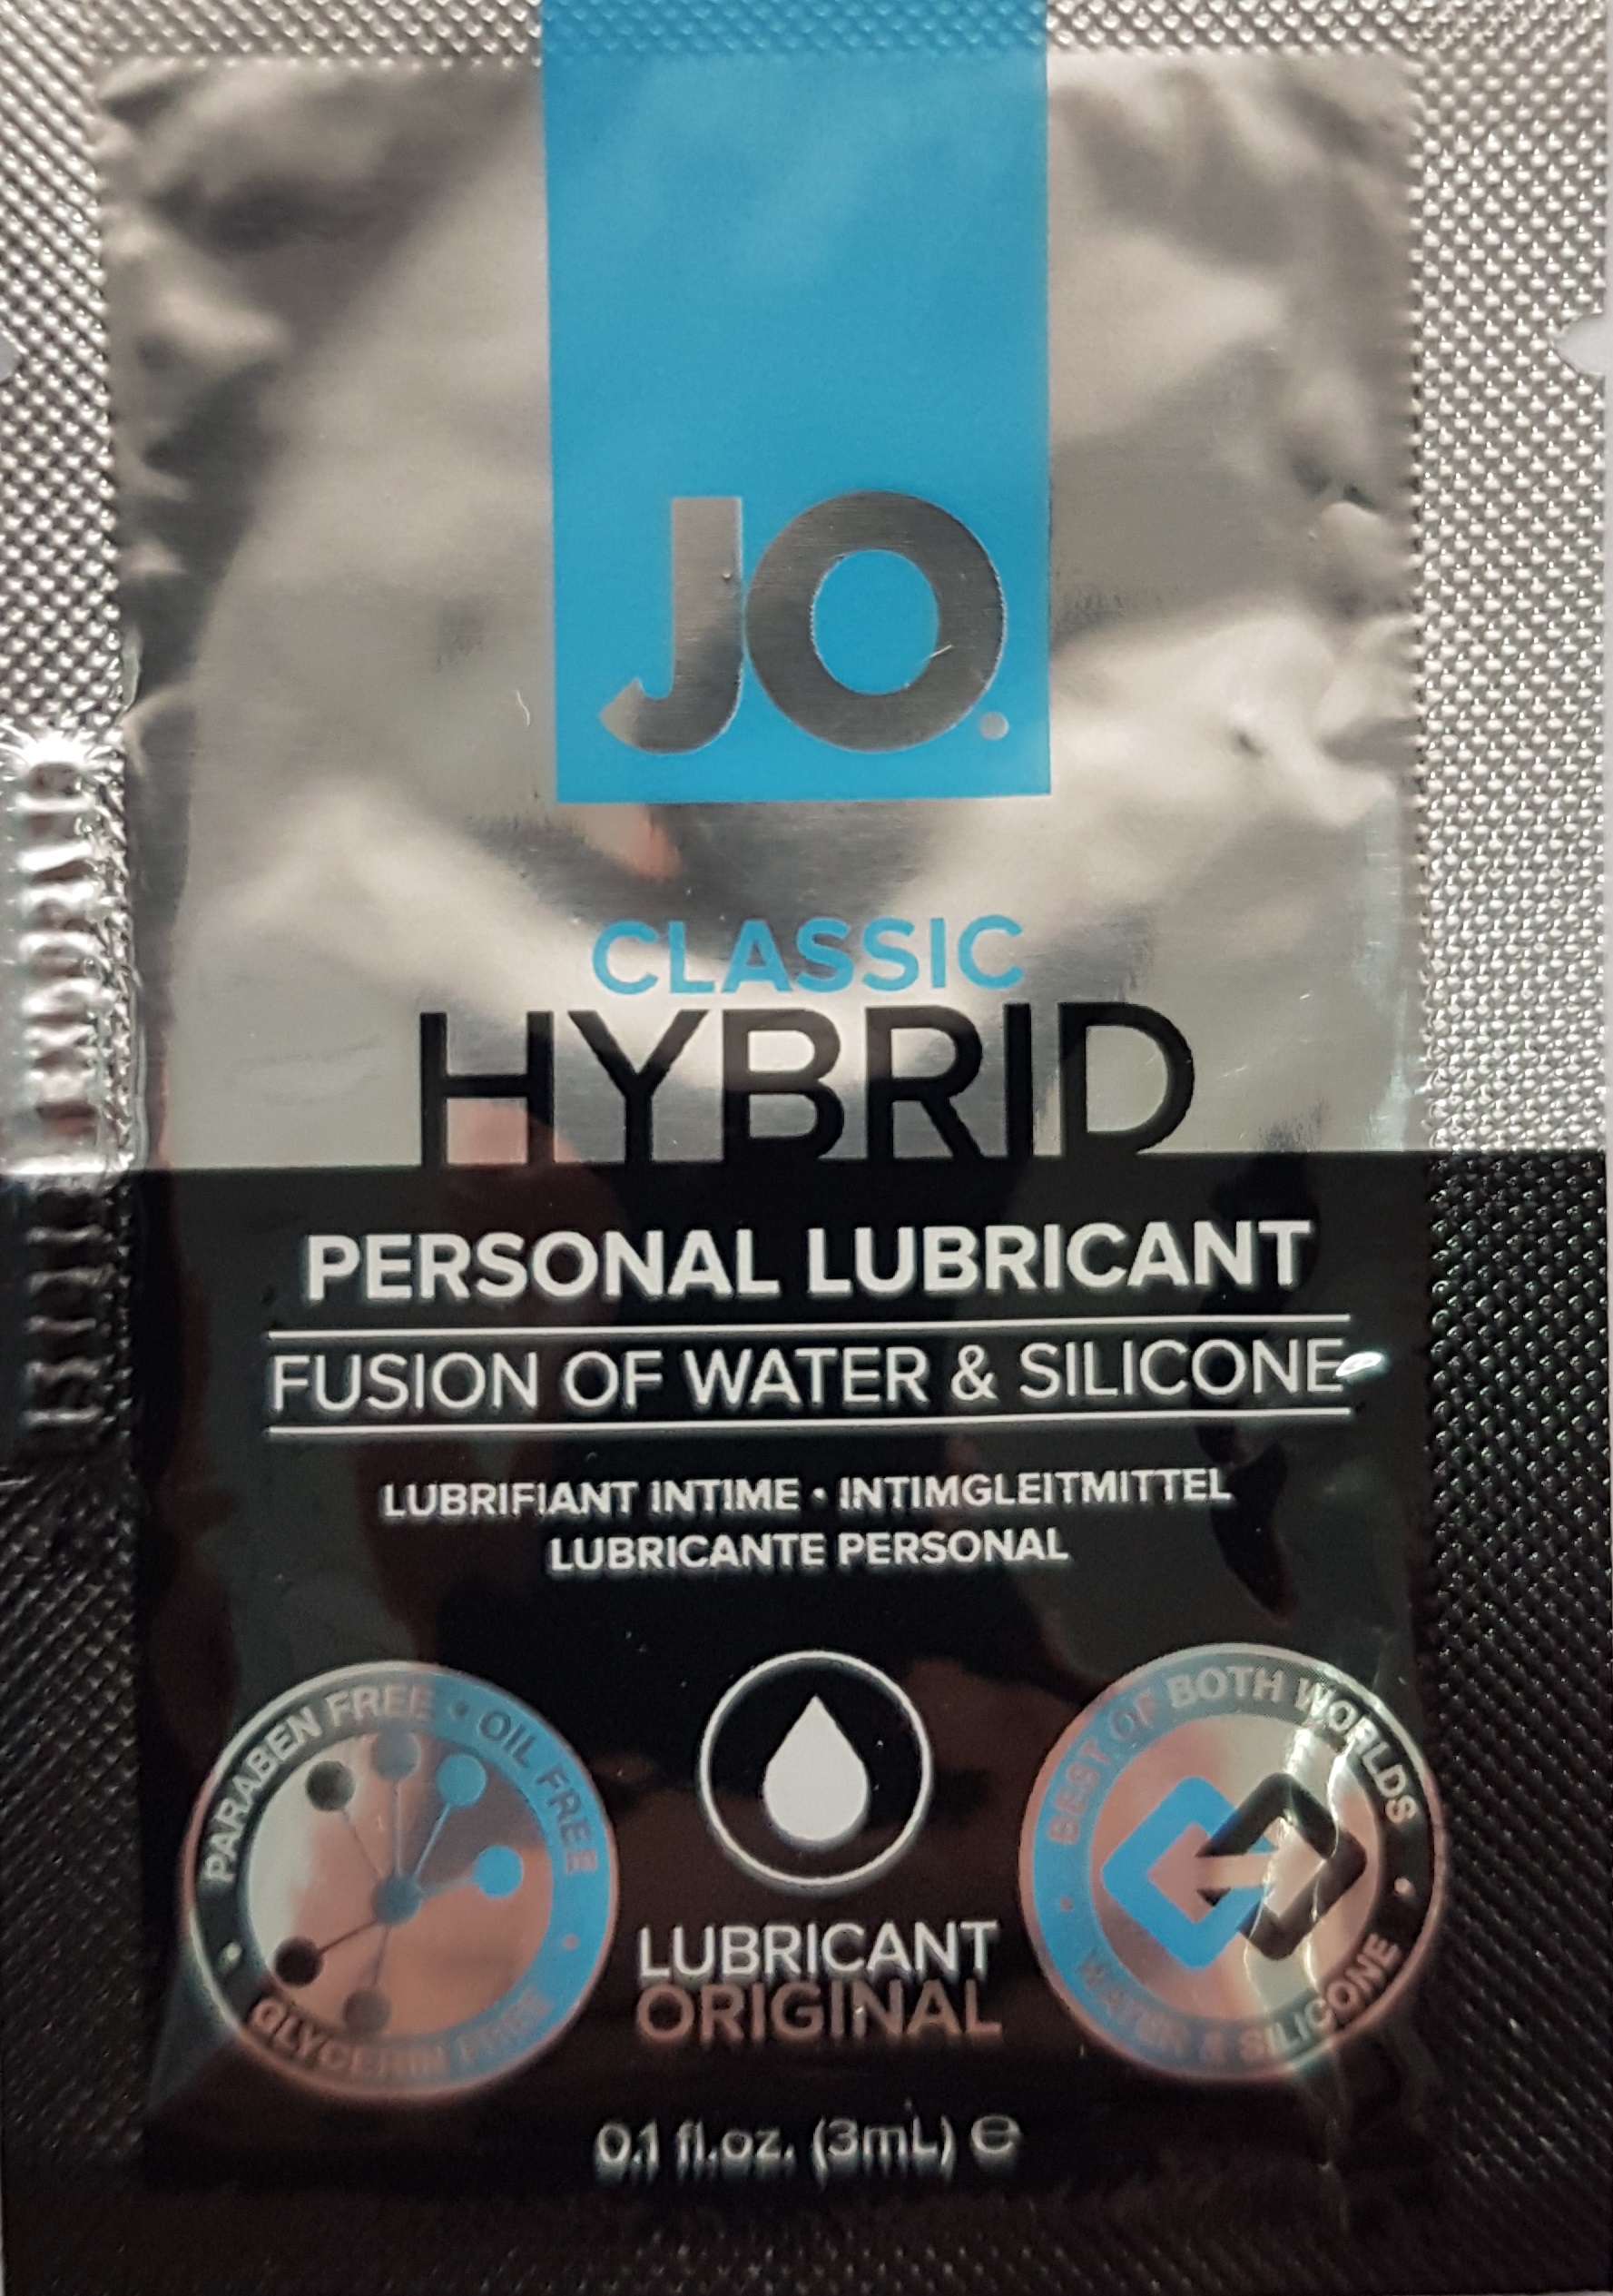 Лубрикант JO Lubricant Hybridна водно-силиконовой основе, 3 мл